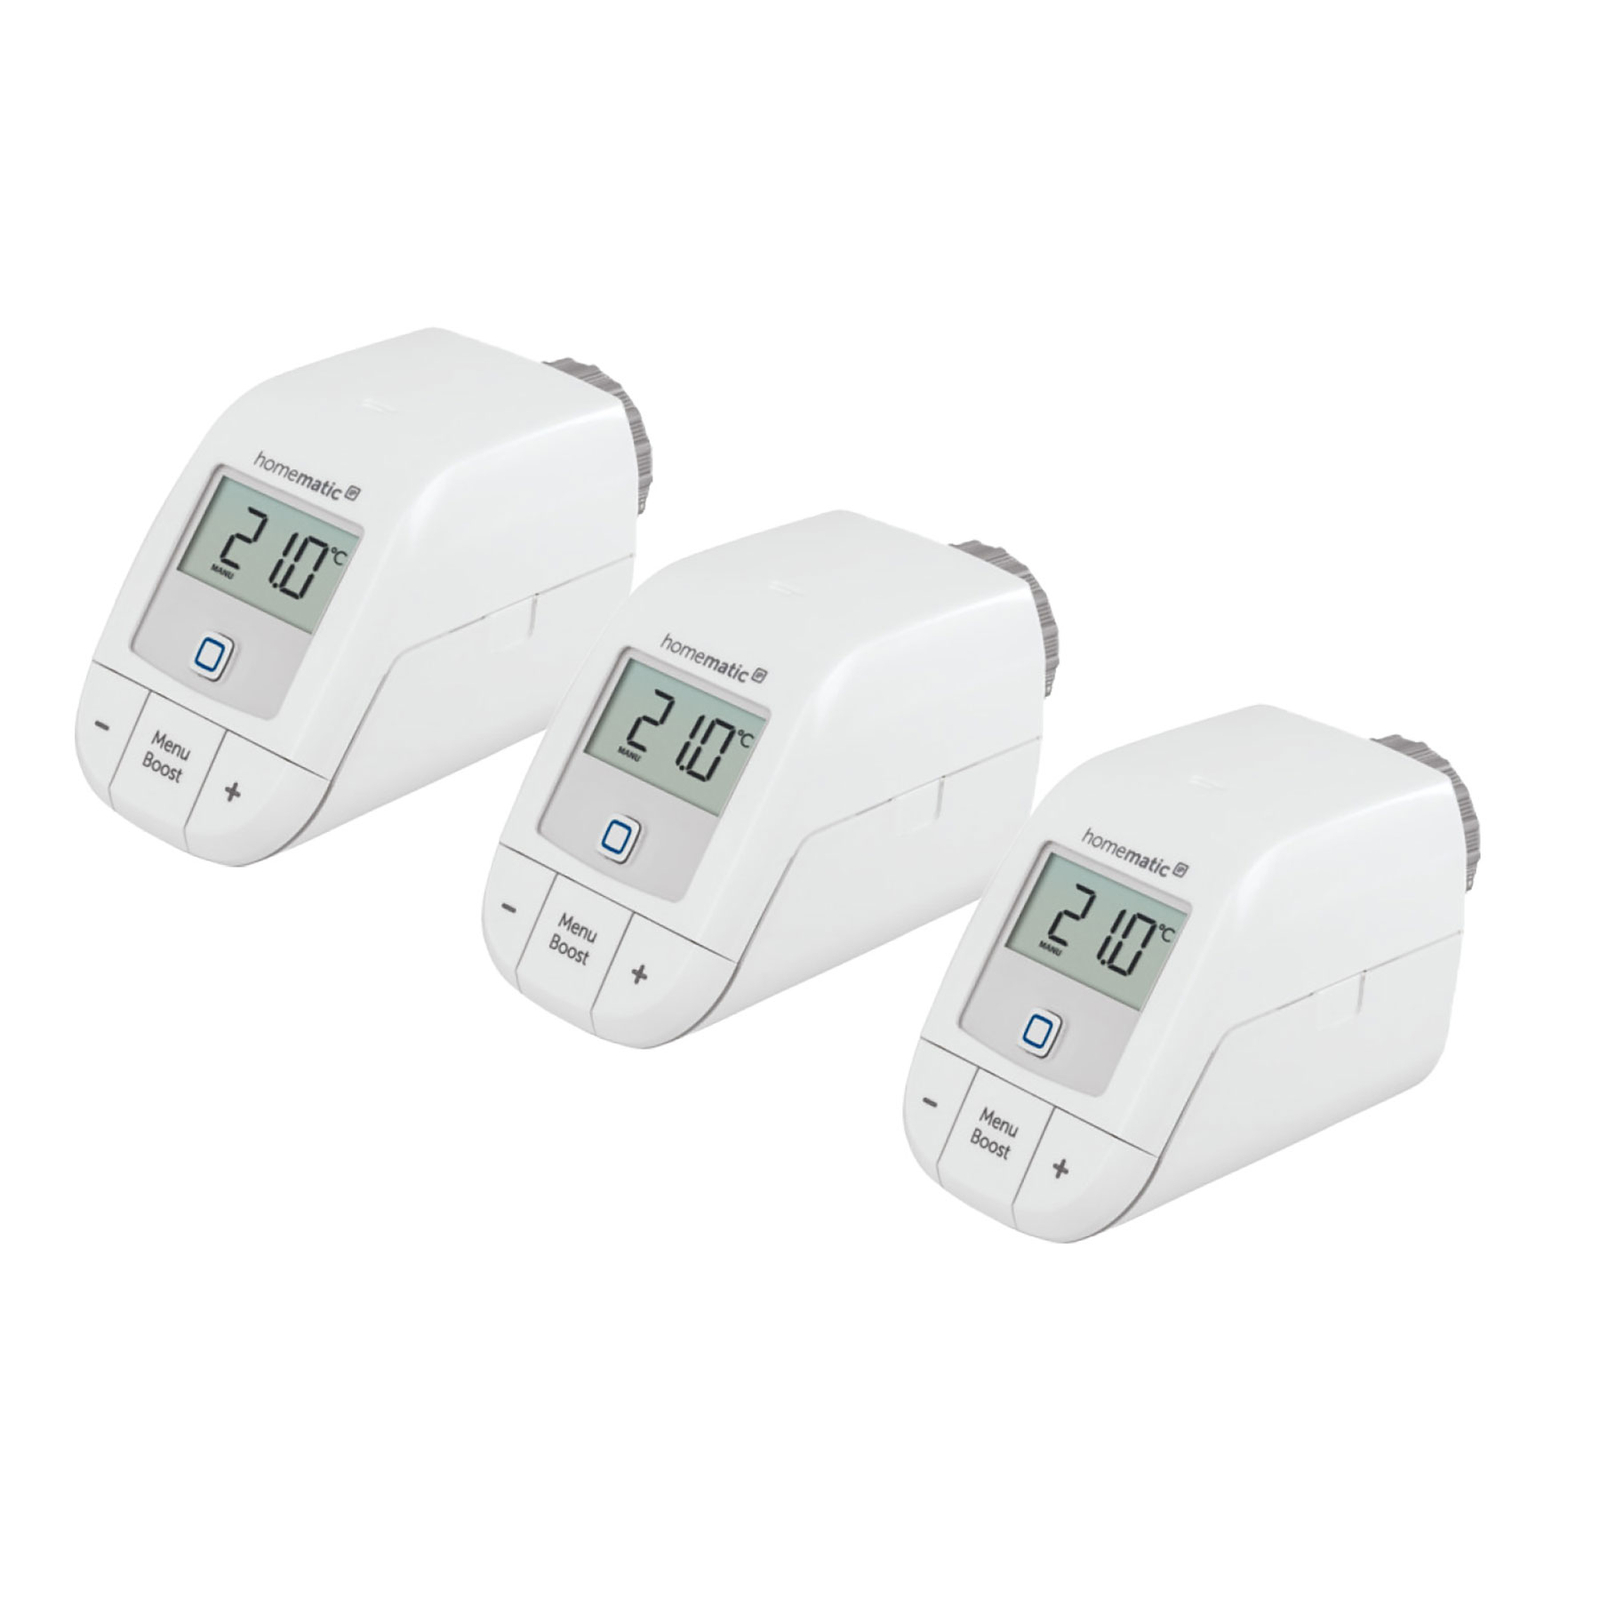 3x Homematic IP radiator thermostat basic